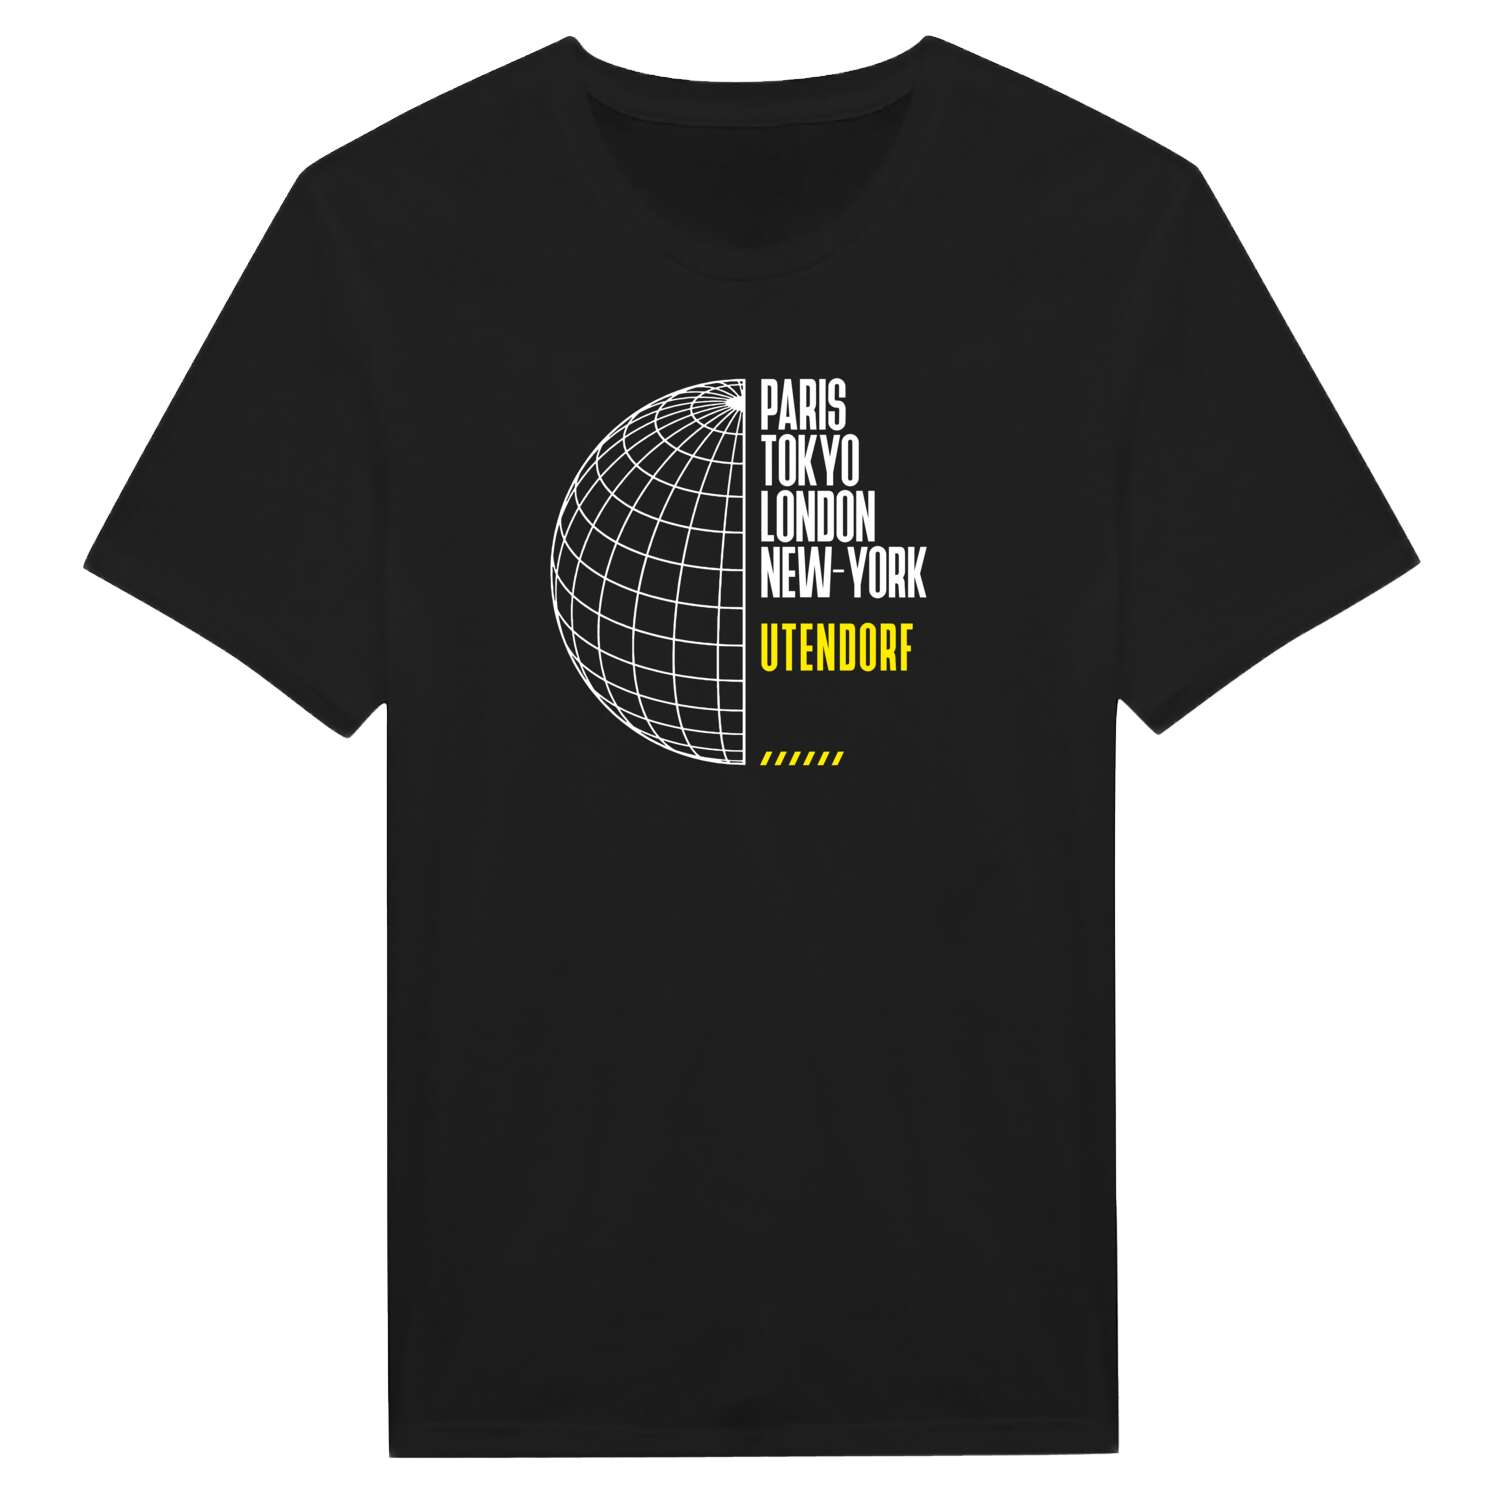 Utendorf T-Shirt »Paris Tokyo London«